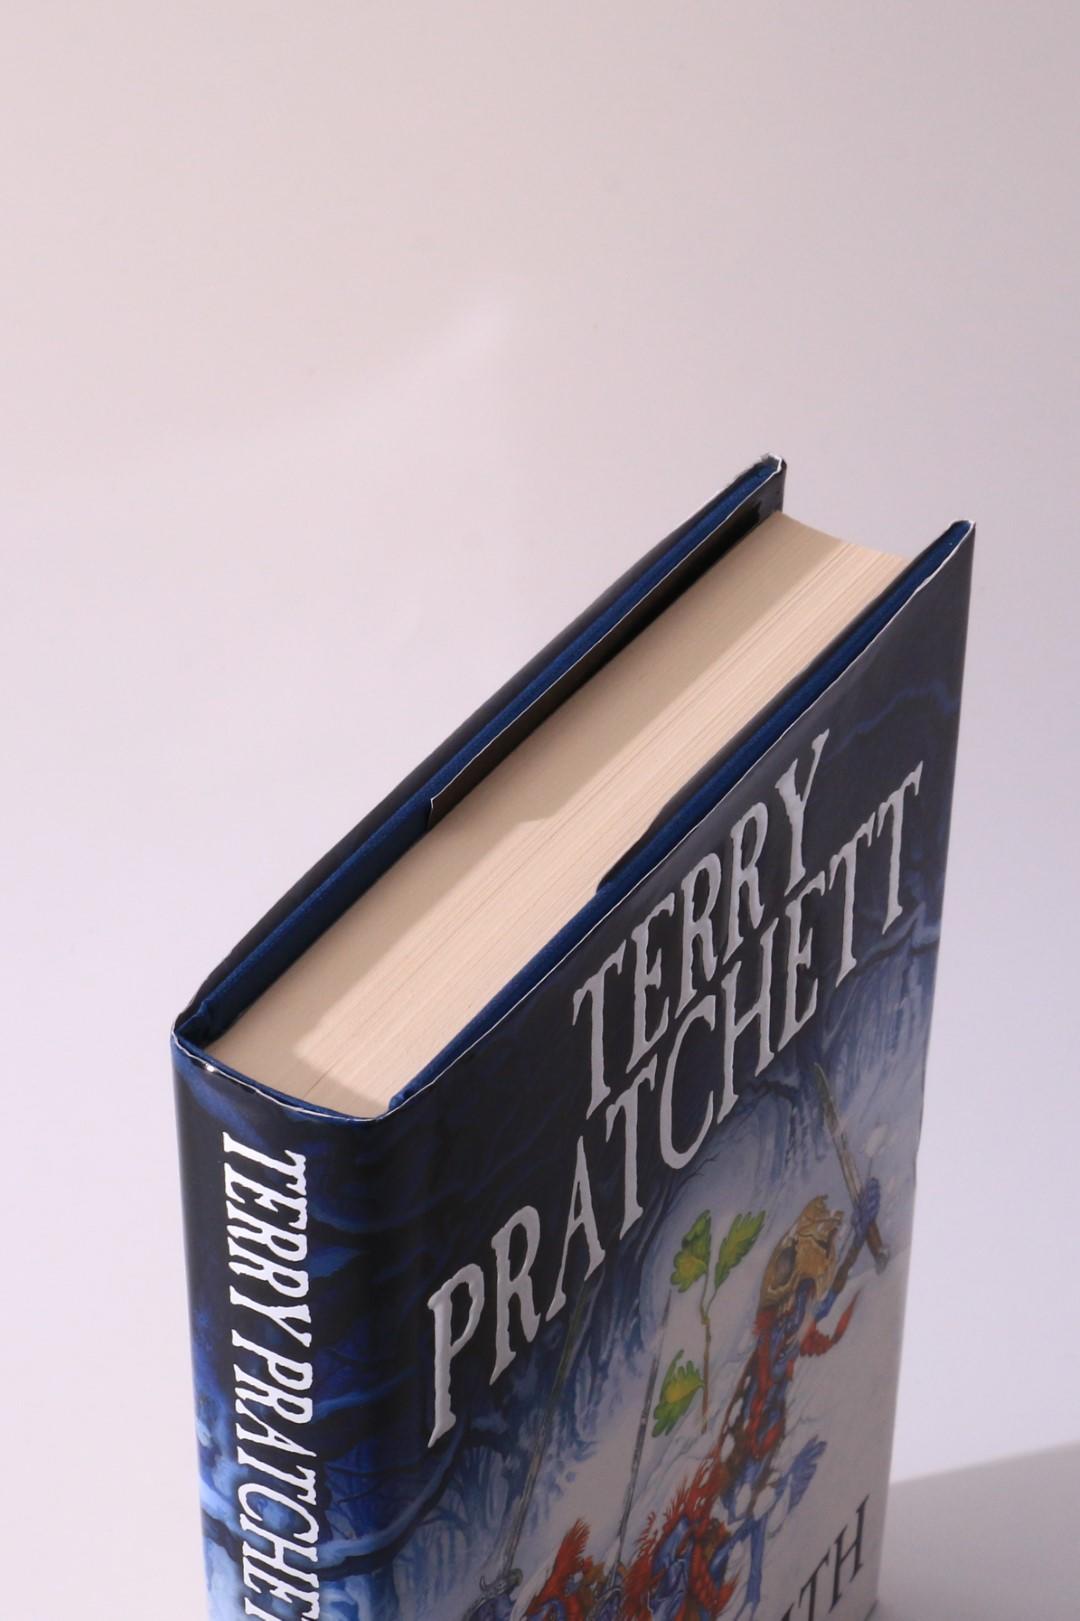 Terry Pratchett - Wintersmith - Doubleday, 2006, Signed First Edition.